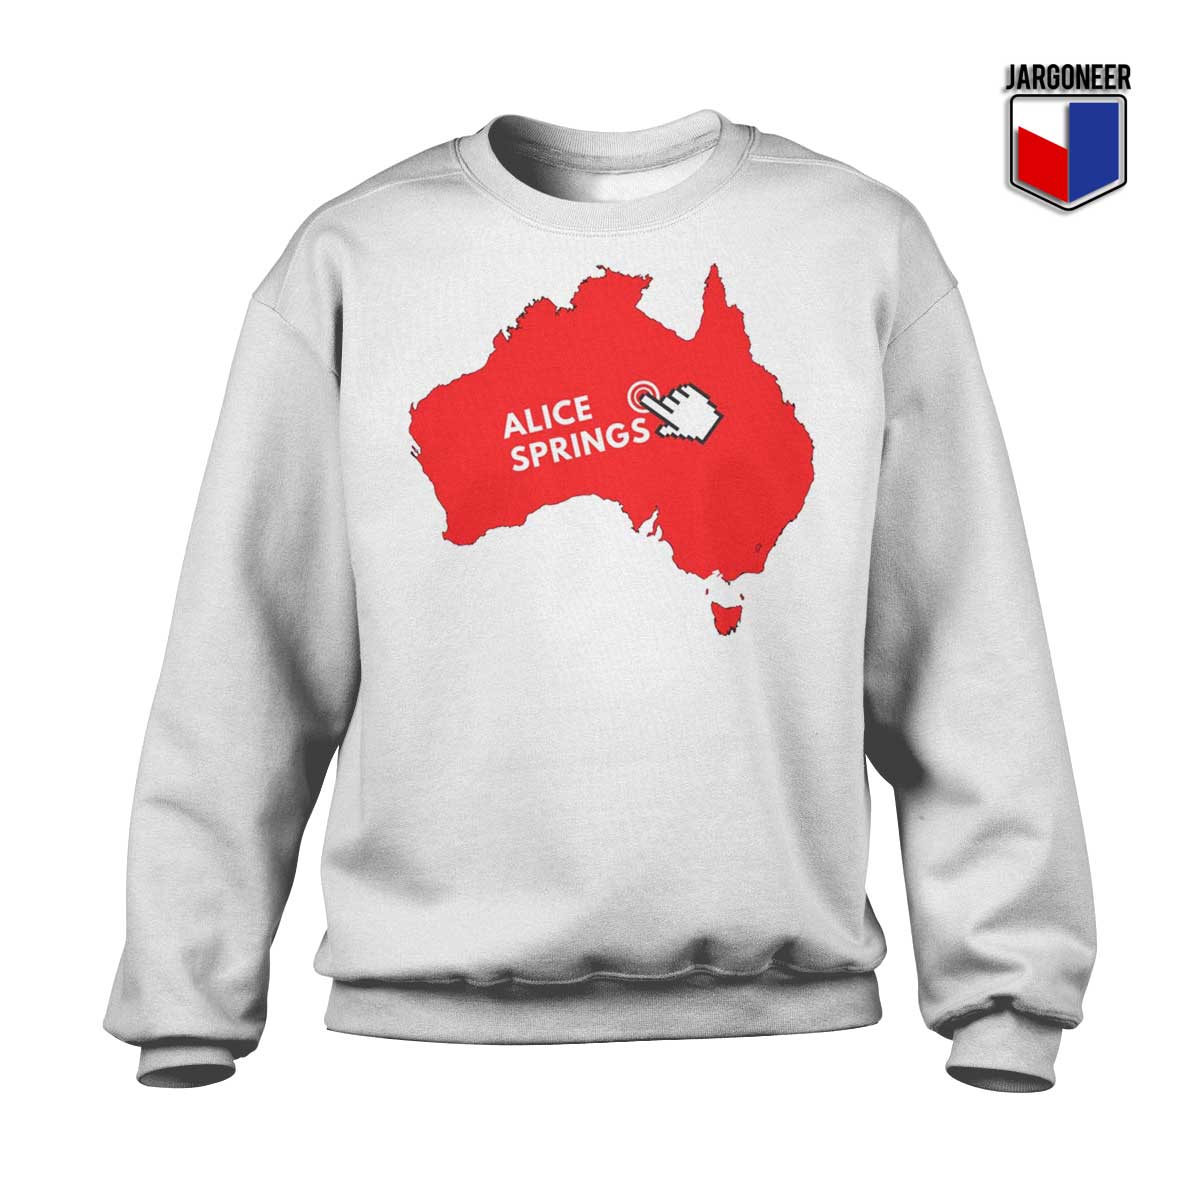 Alice Springs Show Day White Sweatshirt - Shop Unique Graphic Cool Shirt Designs